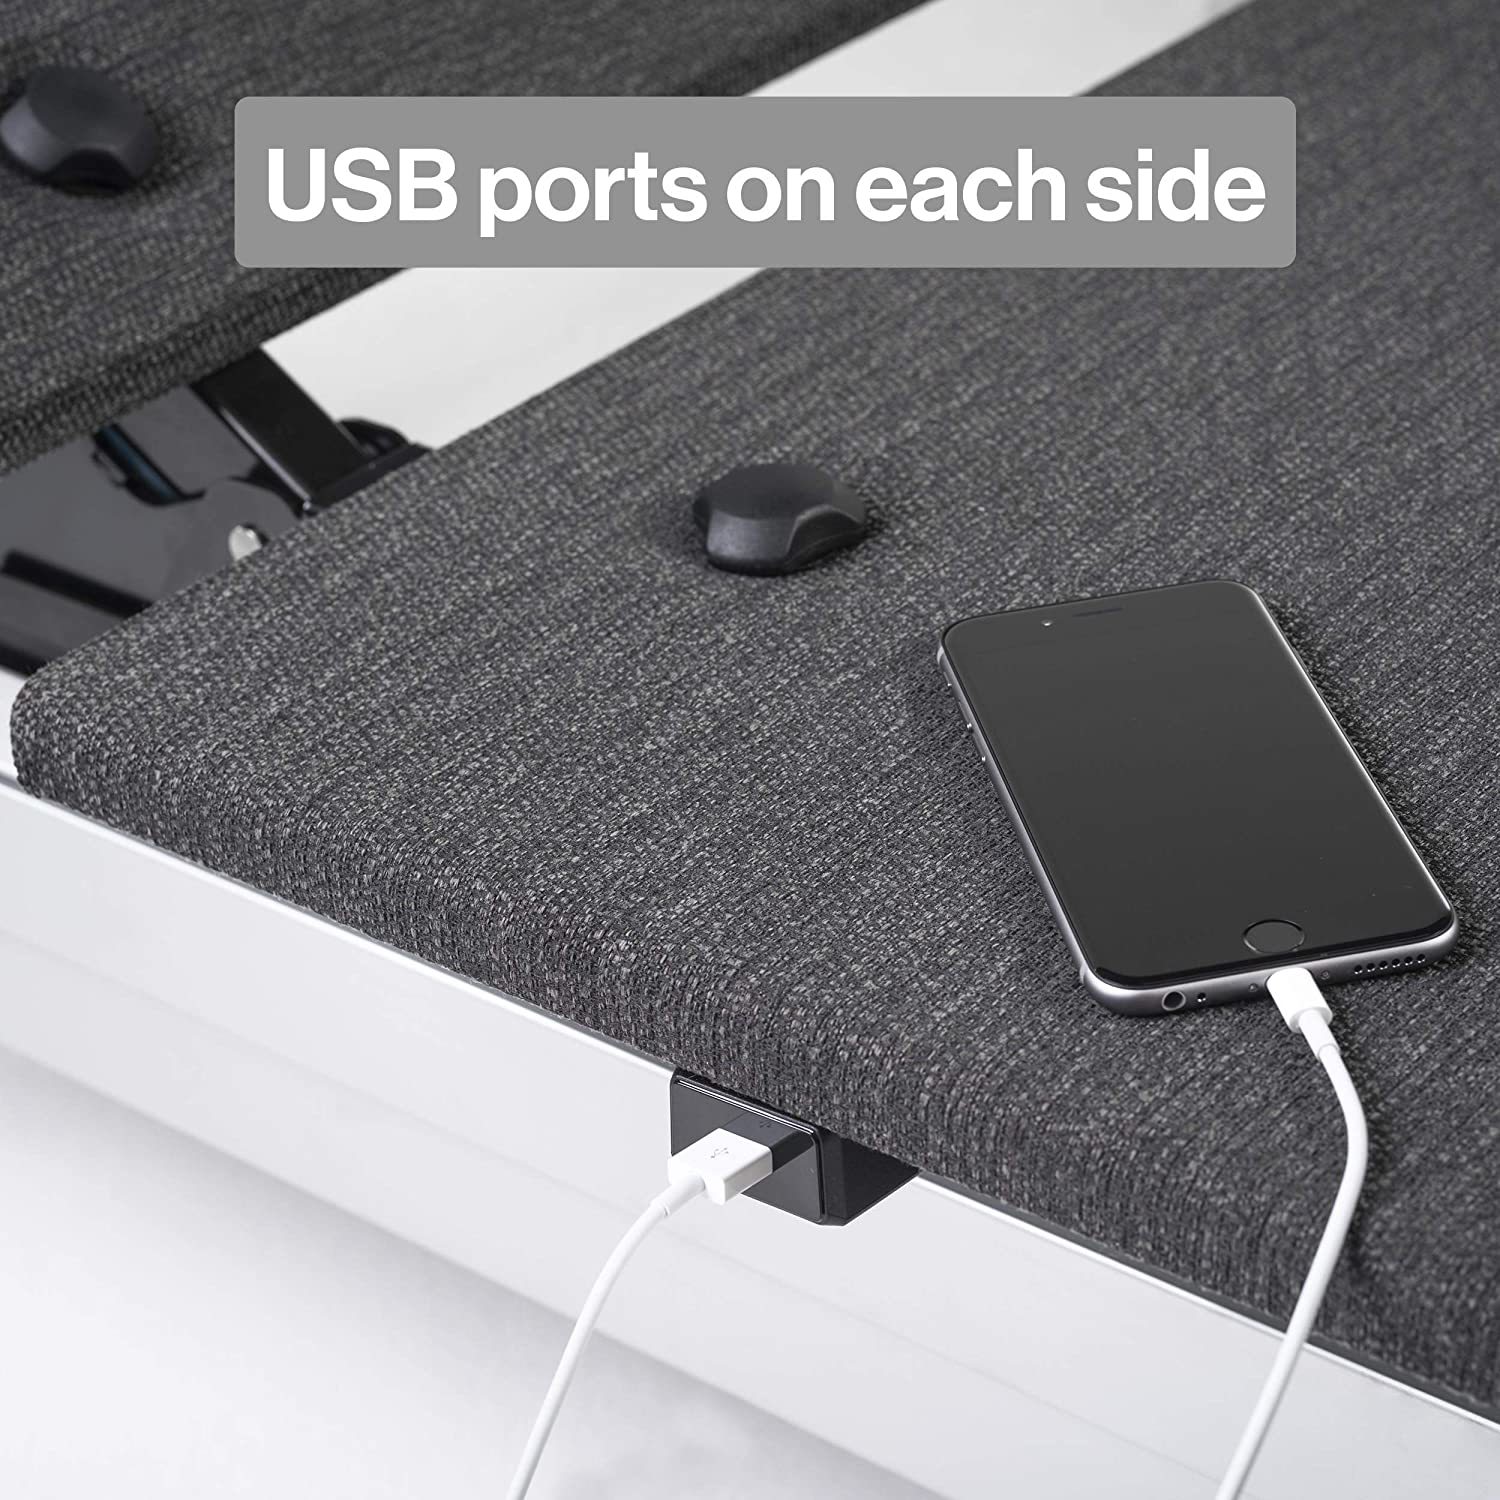 Yaasa Luxe Adjustable Bed Reviews - USB ports